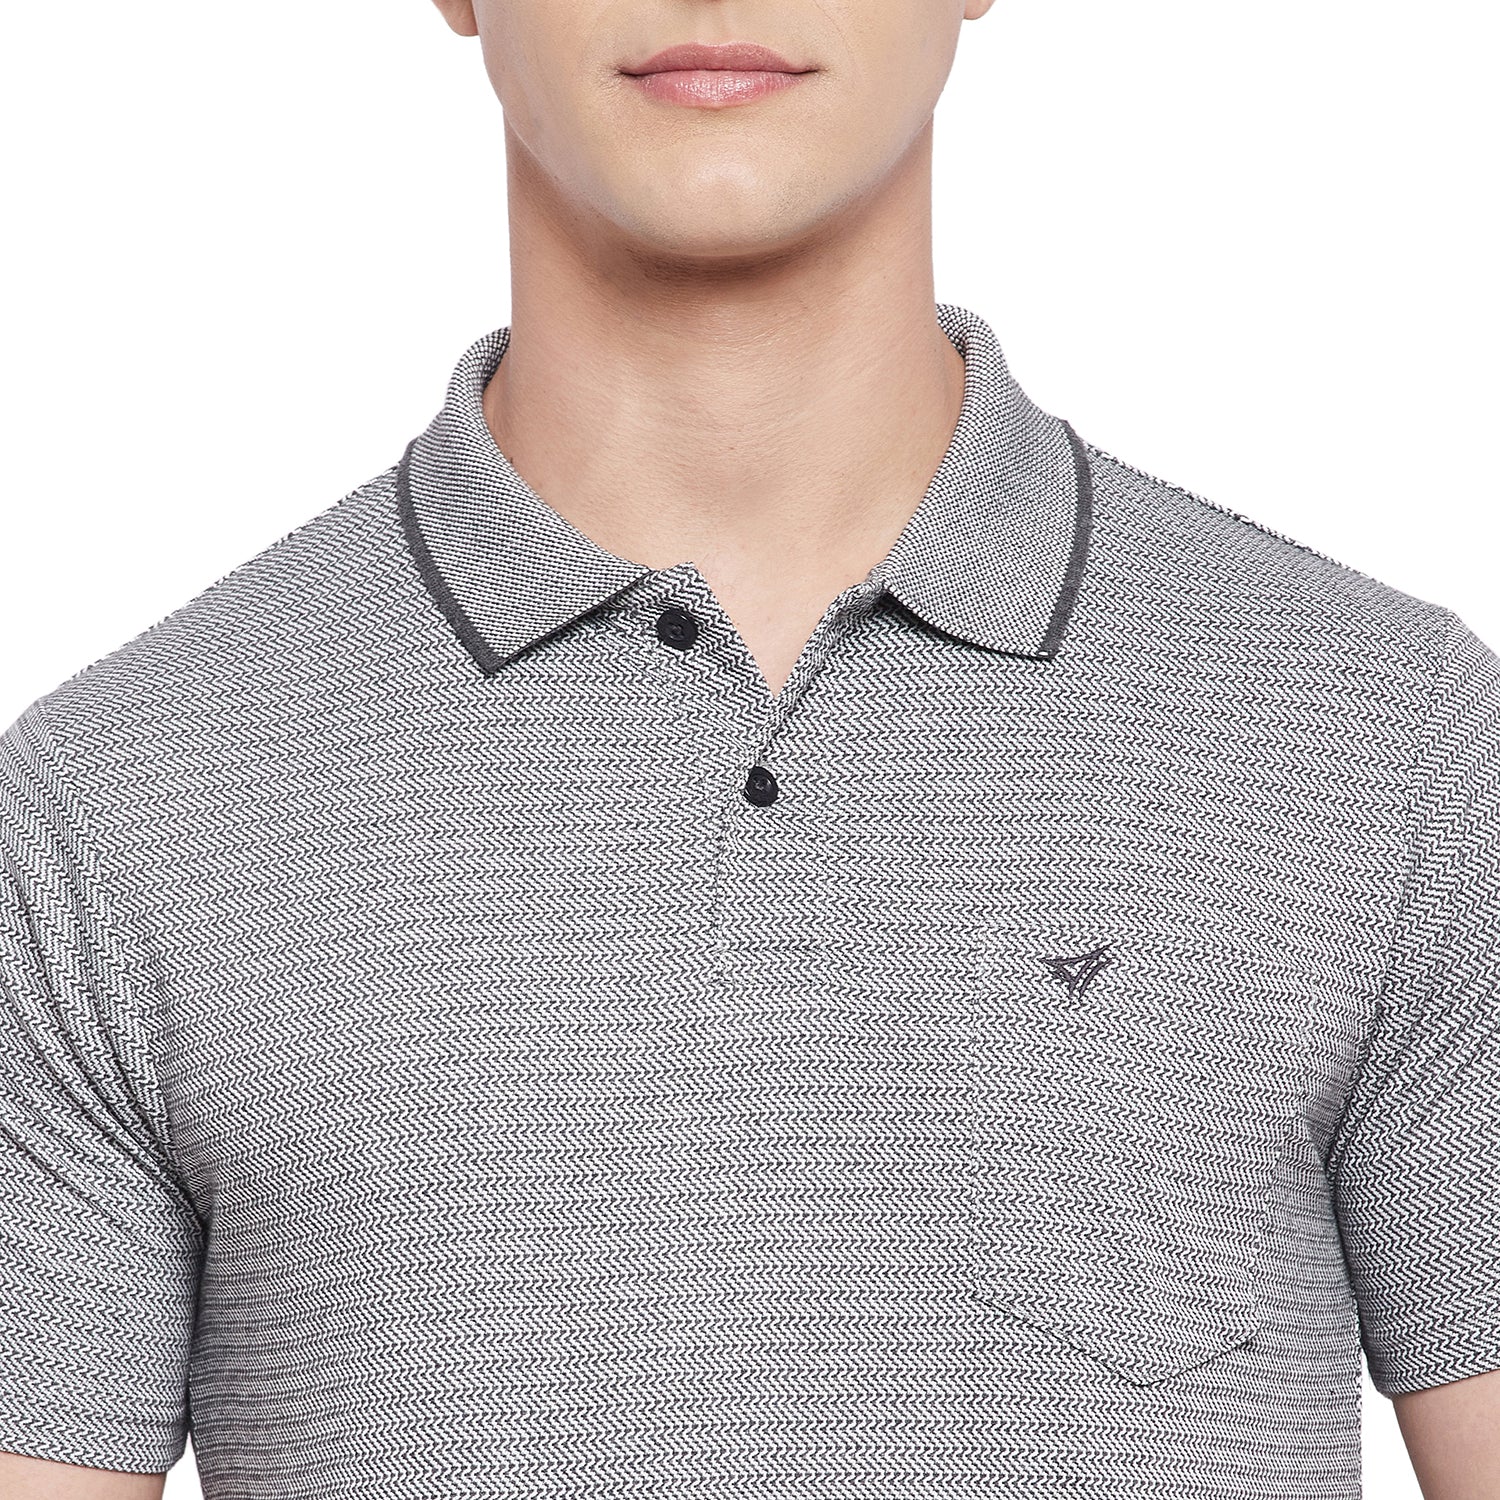 Neva Men Cotton Jacquard Solid Color Polo Half Sleeve T-Shirt- Anthra